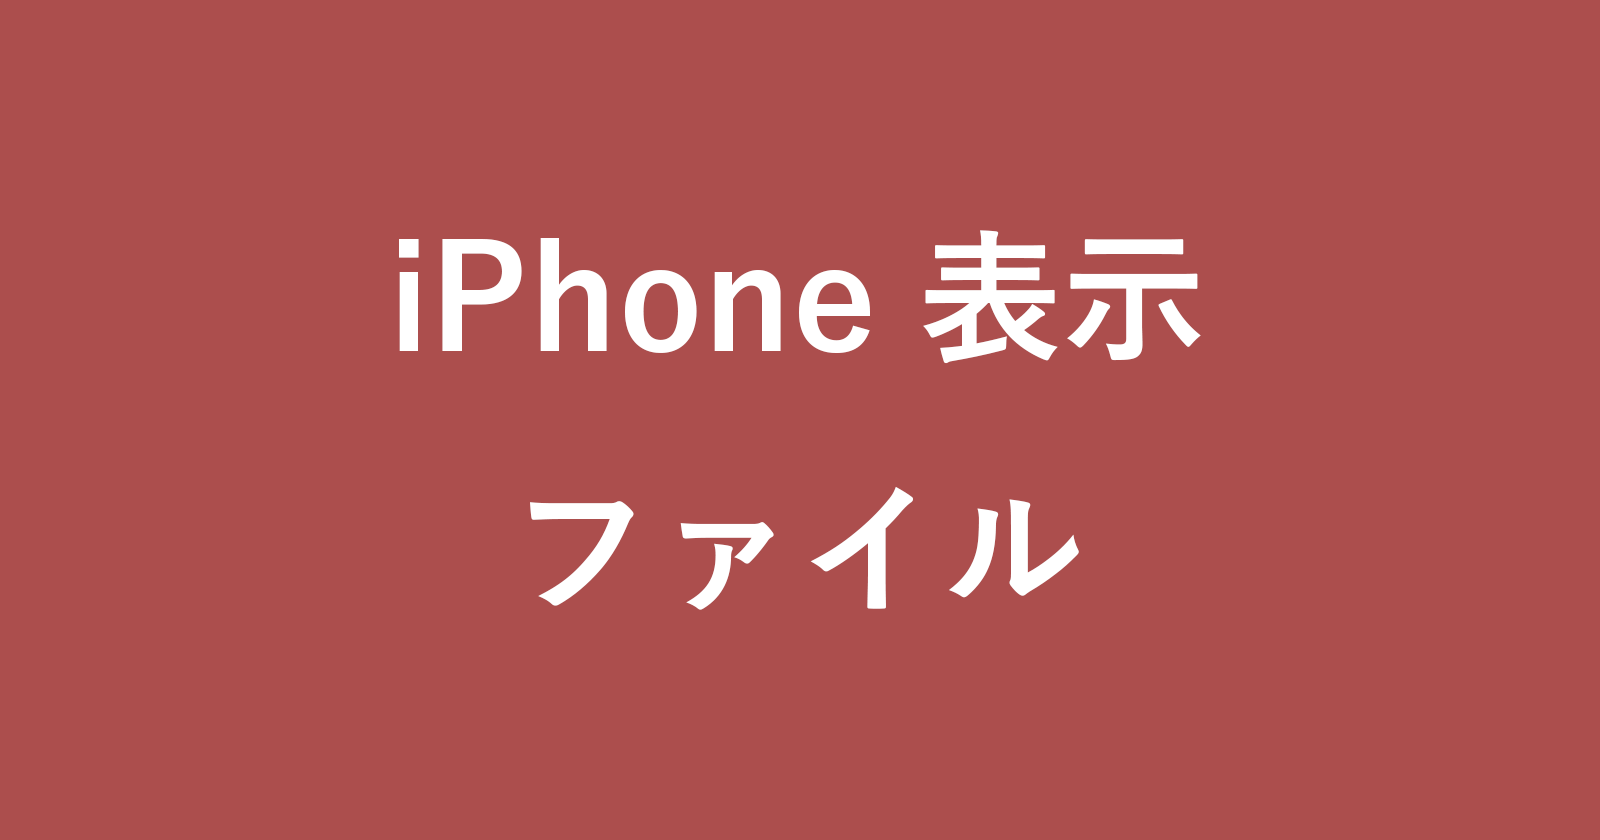 iphone file app list icon